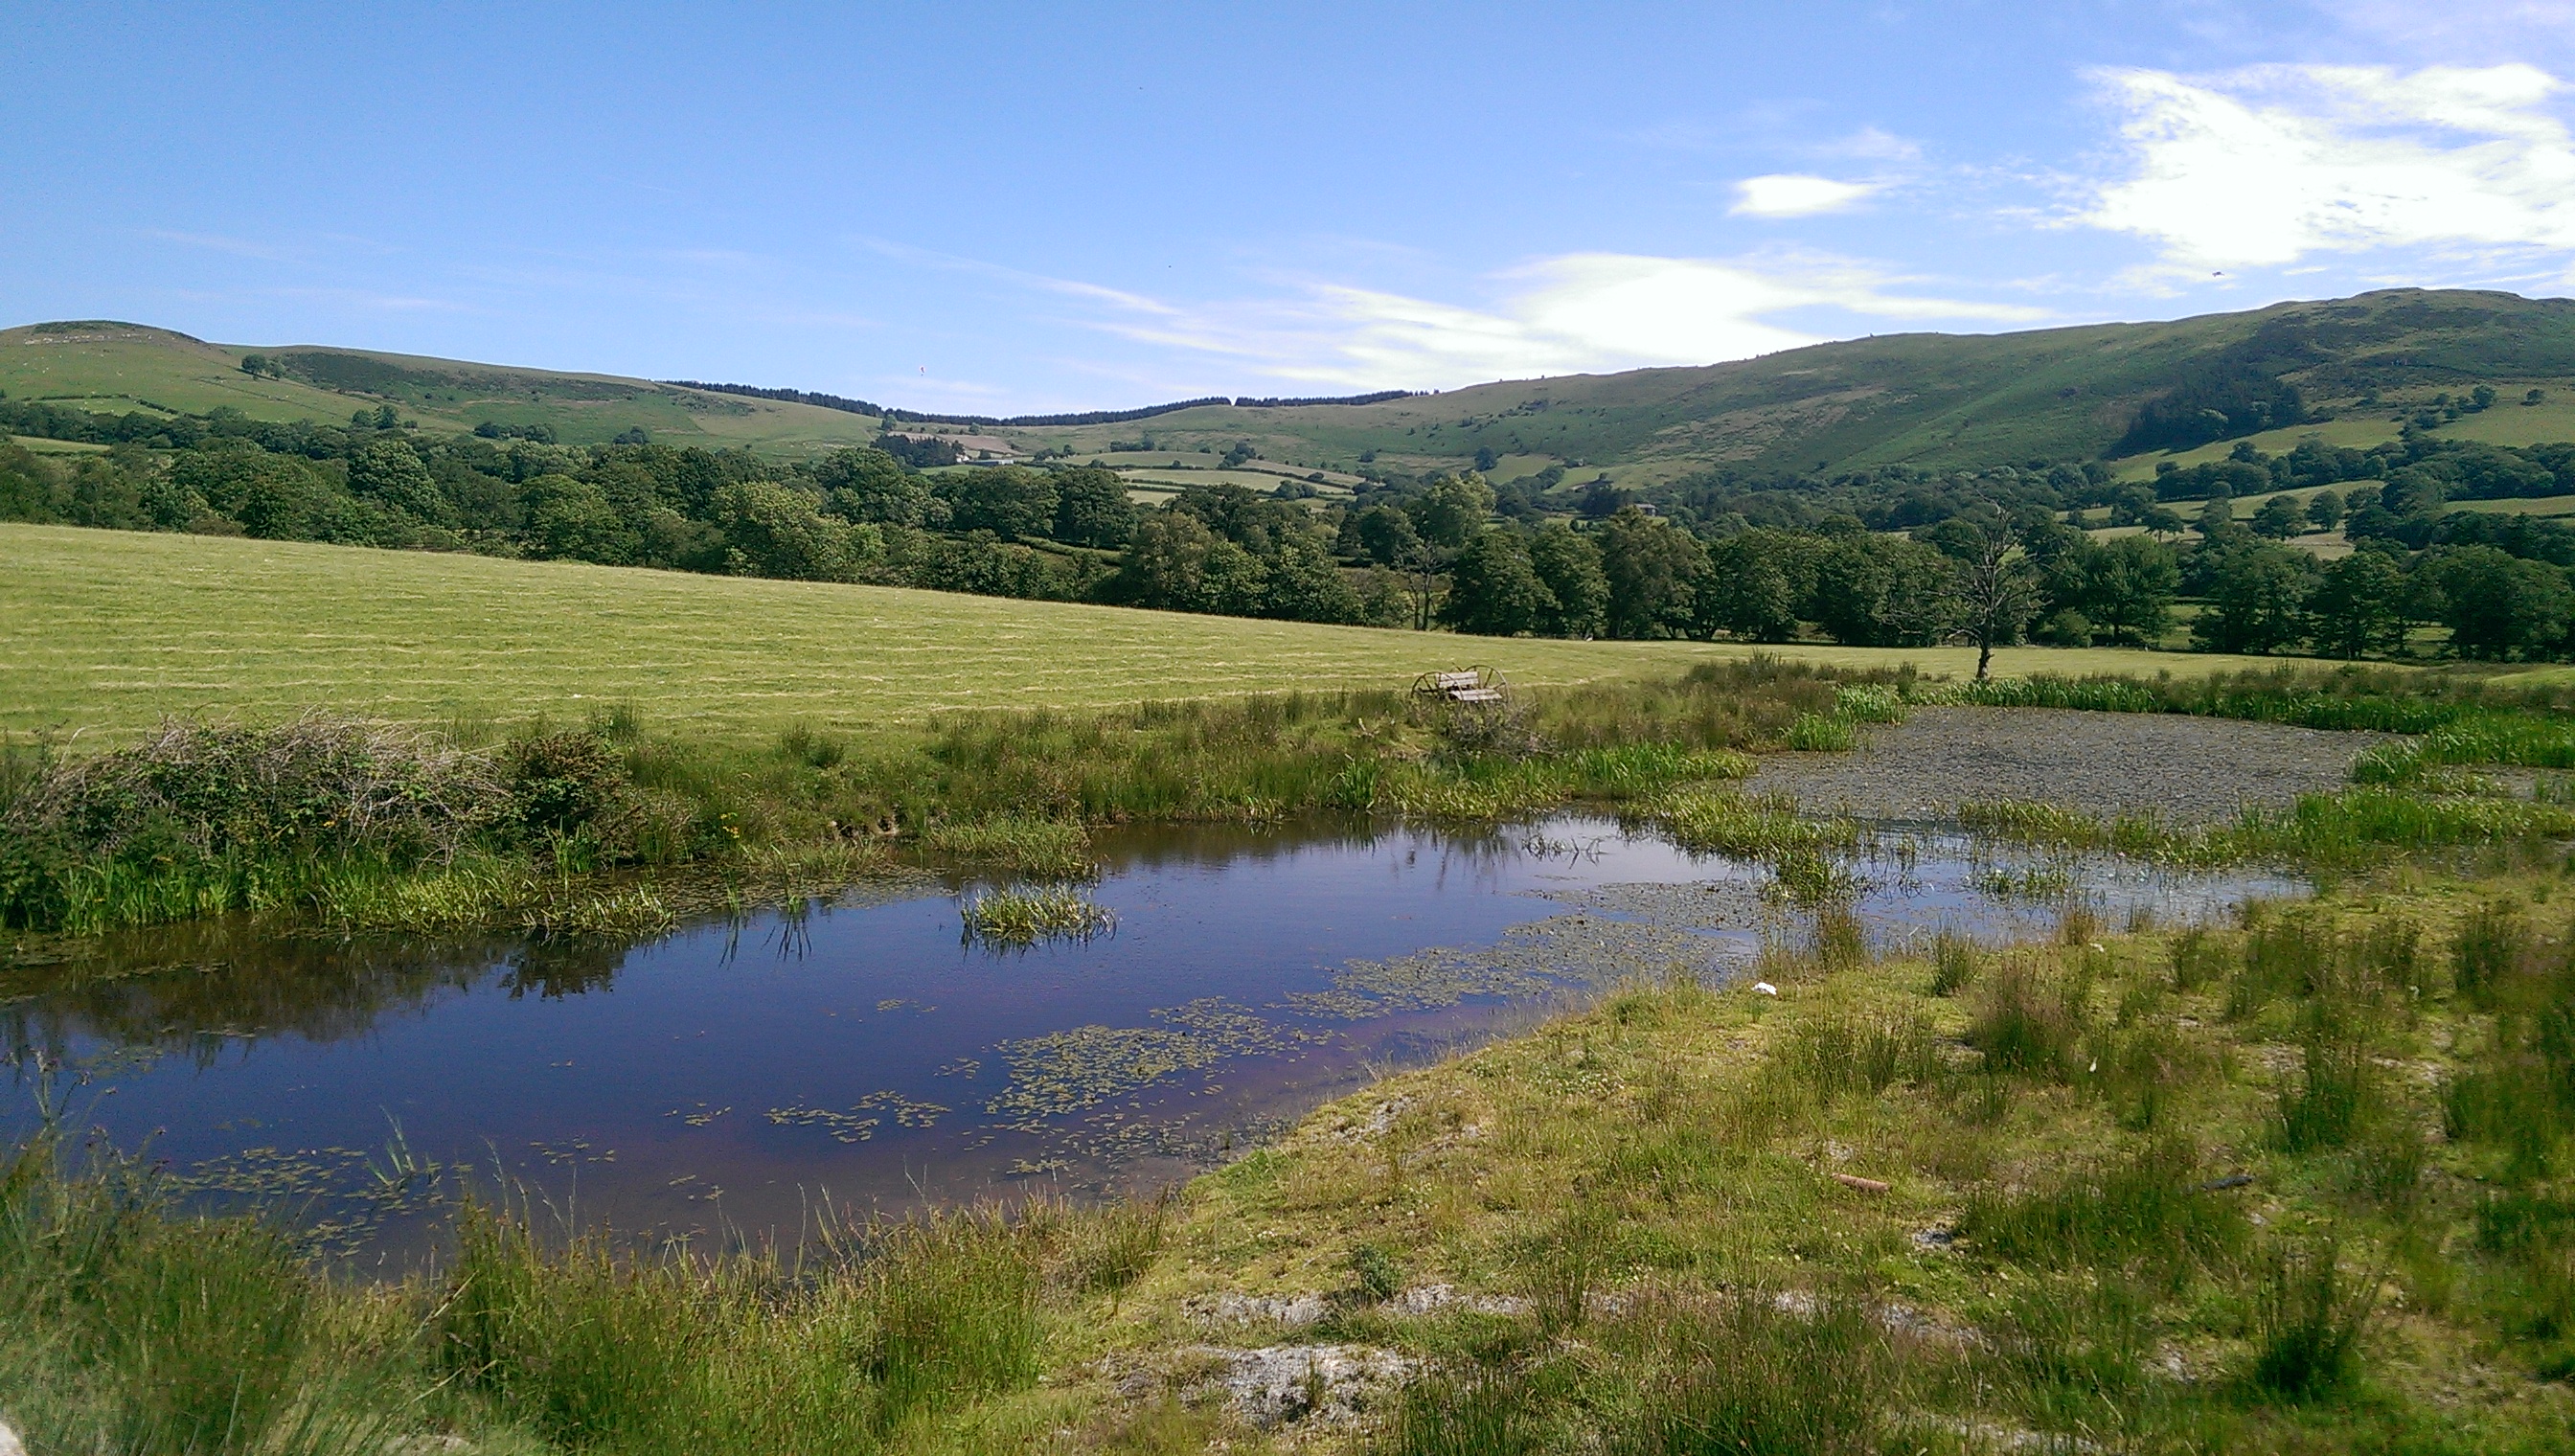 Mid Wales scenery, Nantmel near the Elan Valley